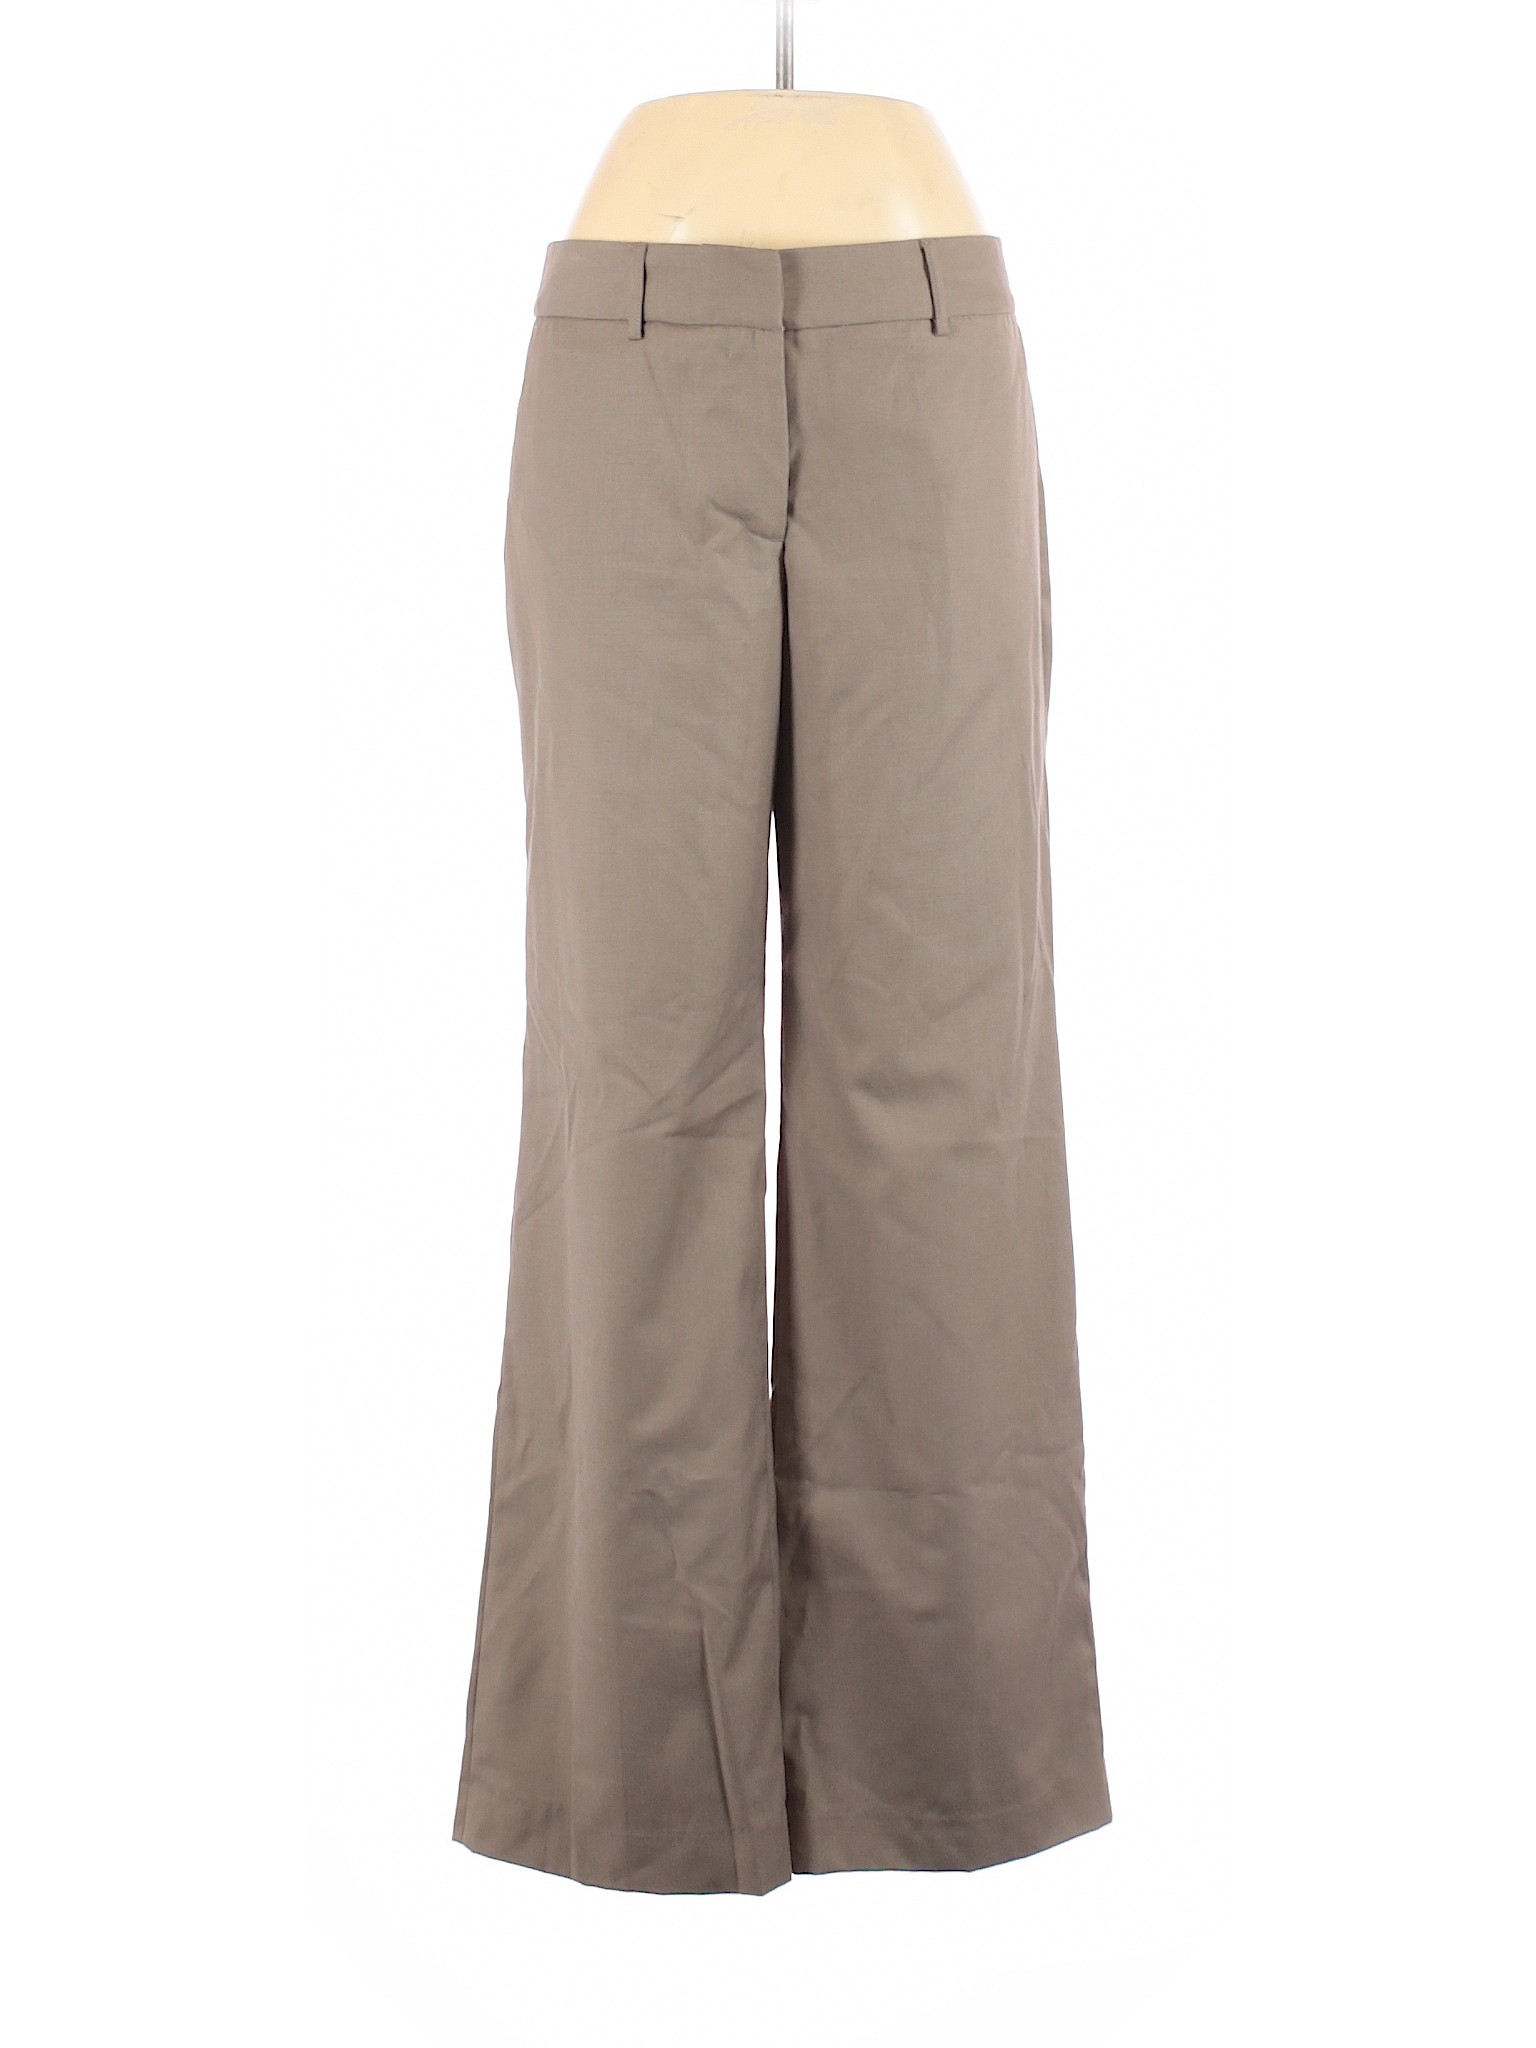 Merona Women Gray Dress Pants 10 | eBay